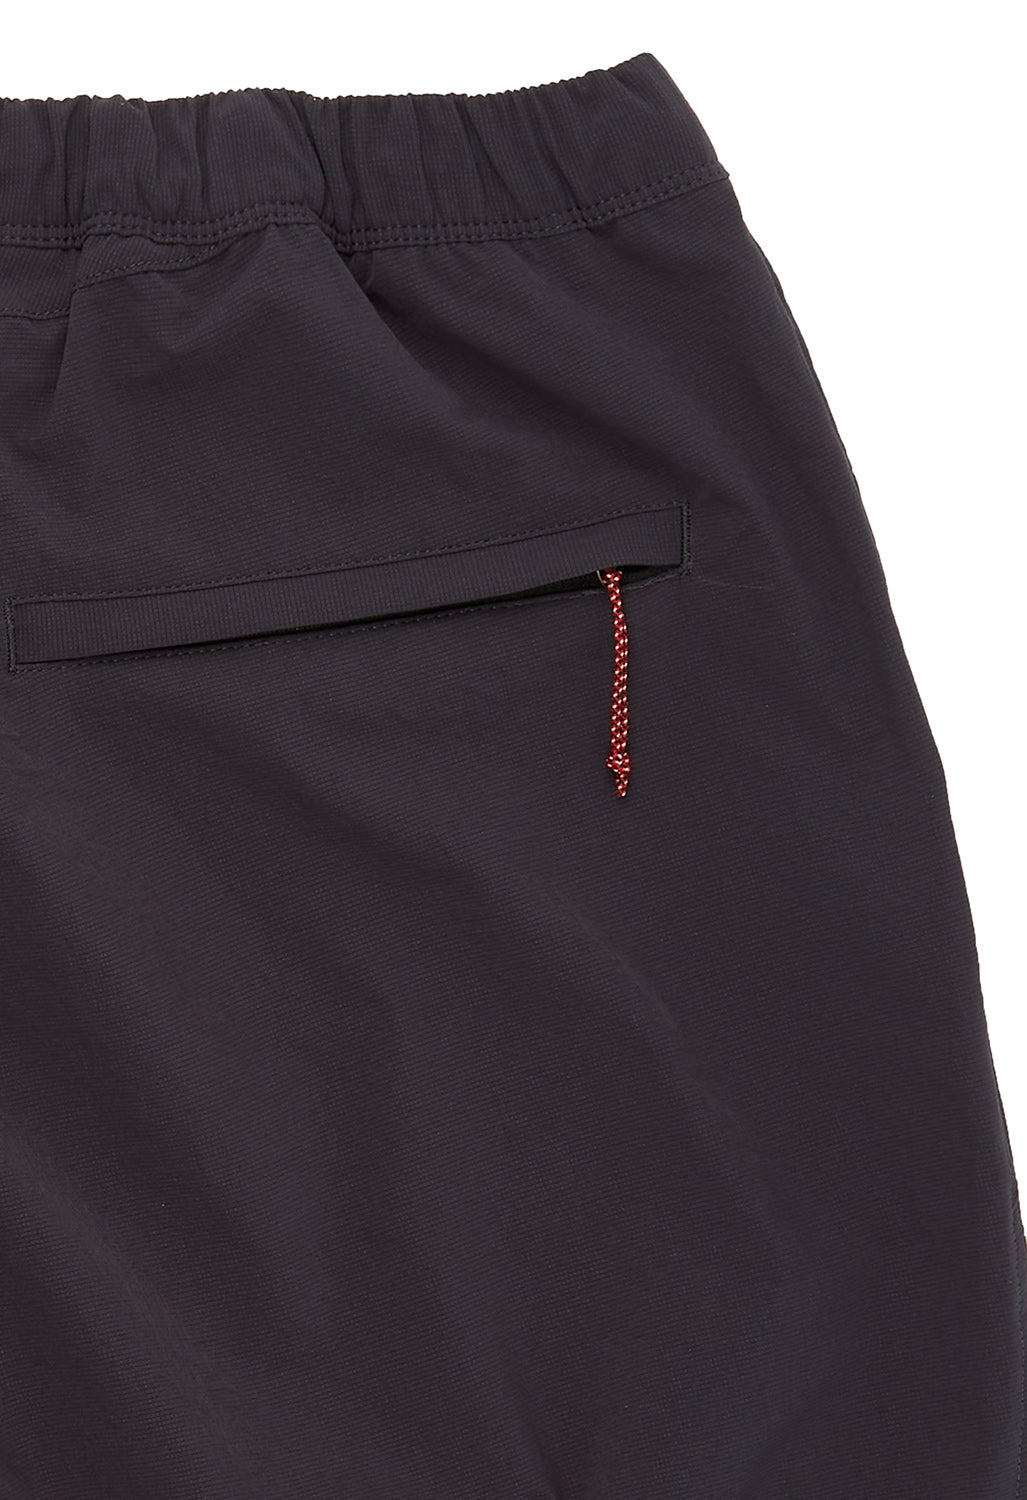 Nanga Men's Dot Air Comfy Shorts - Black